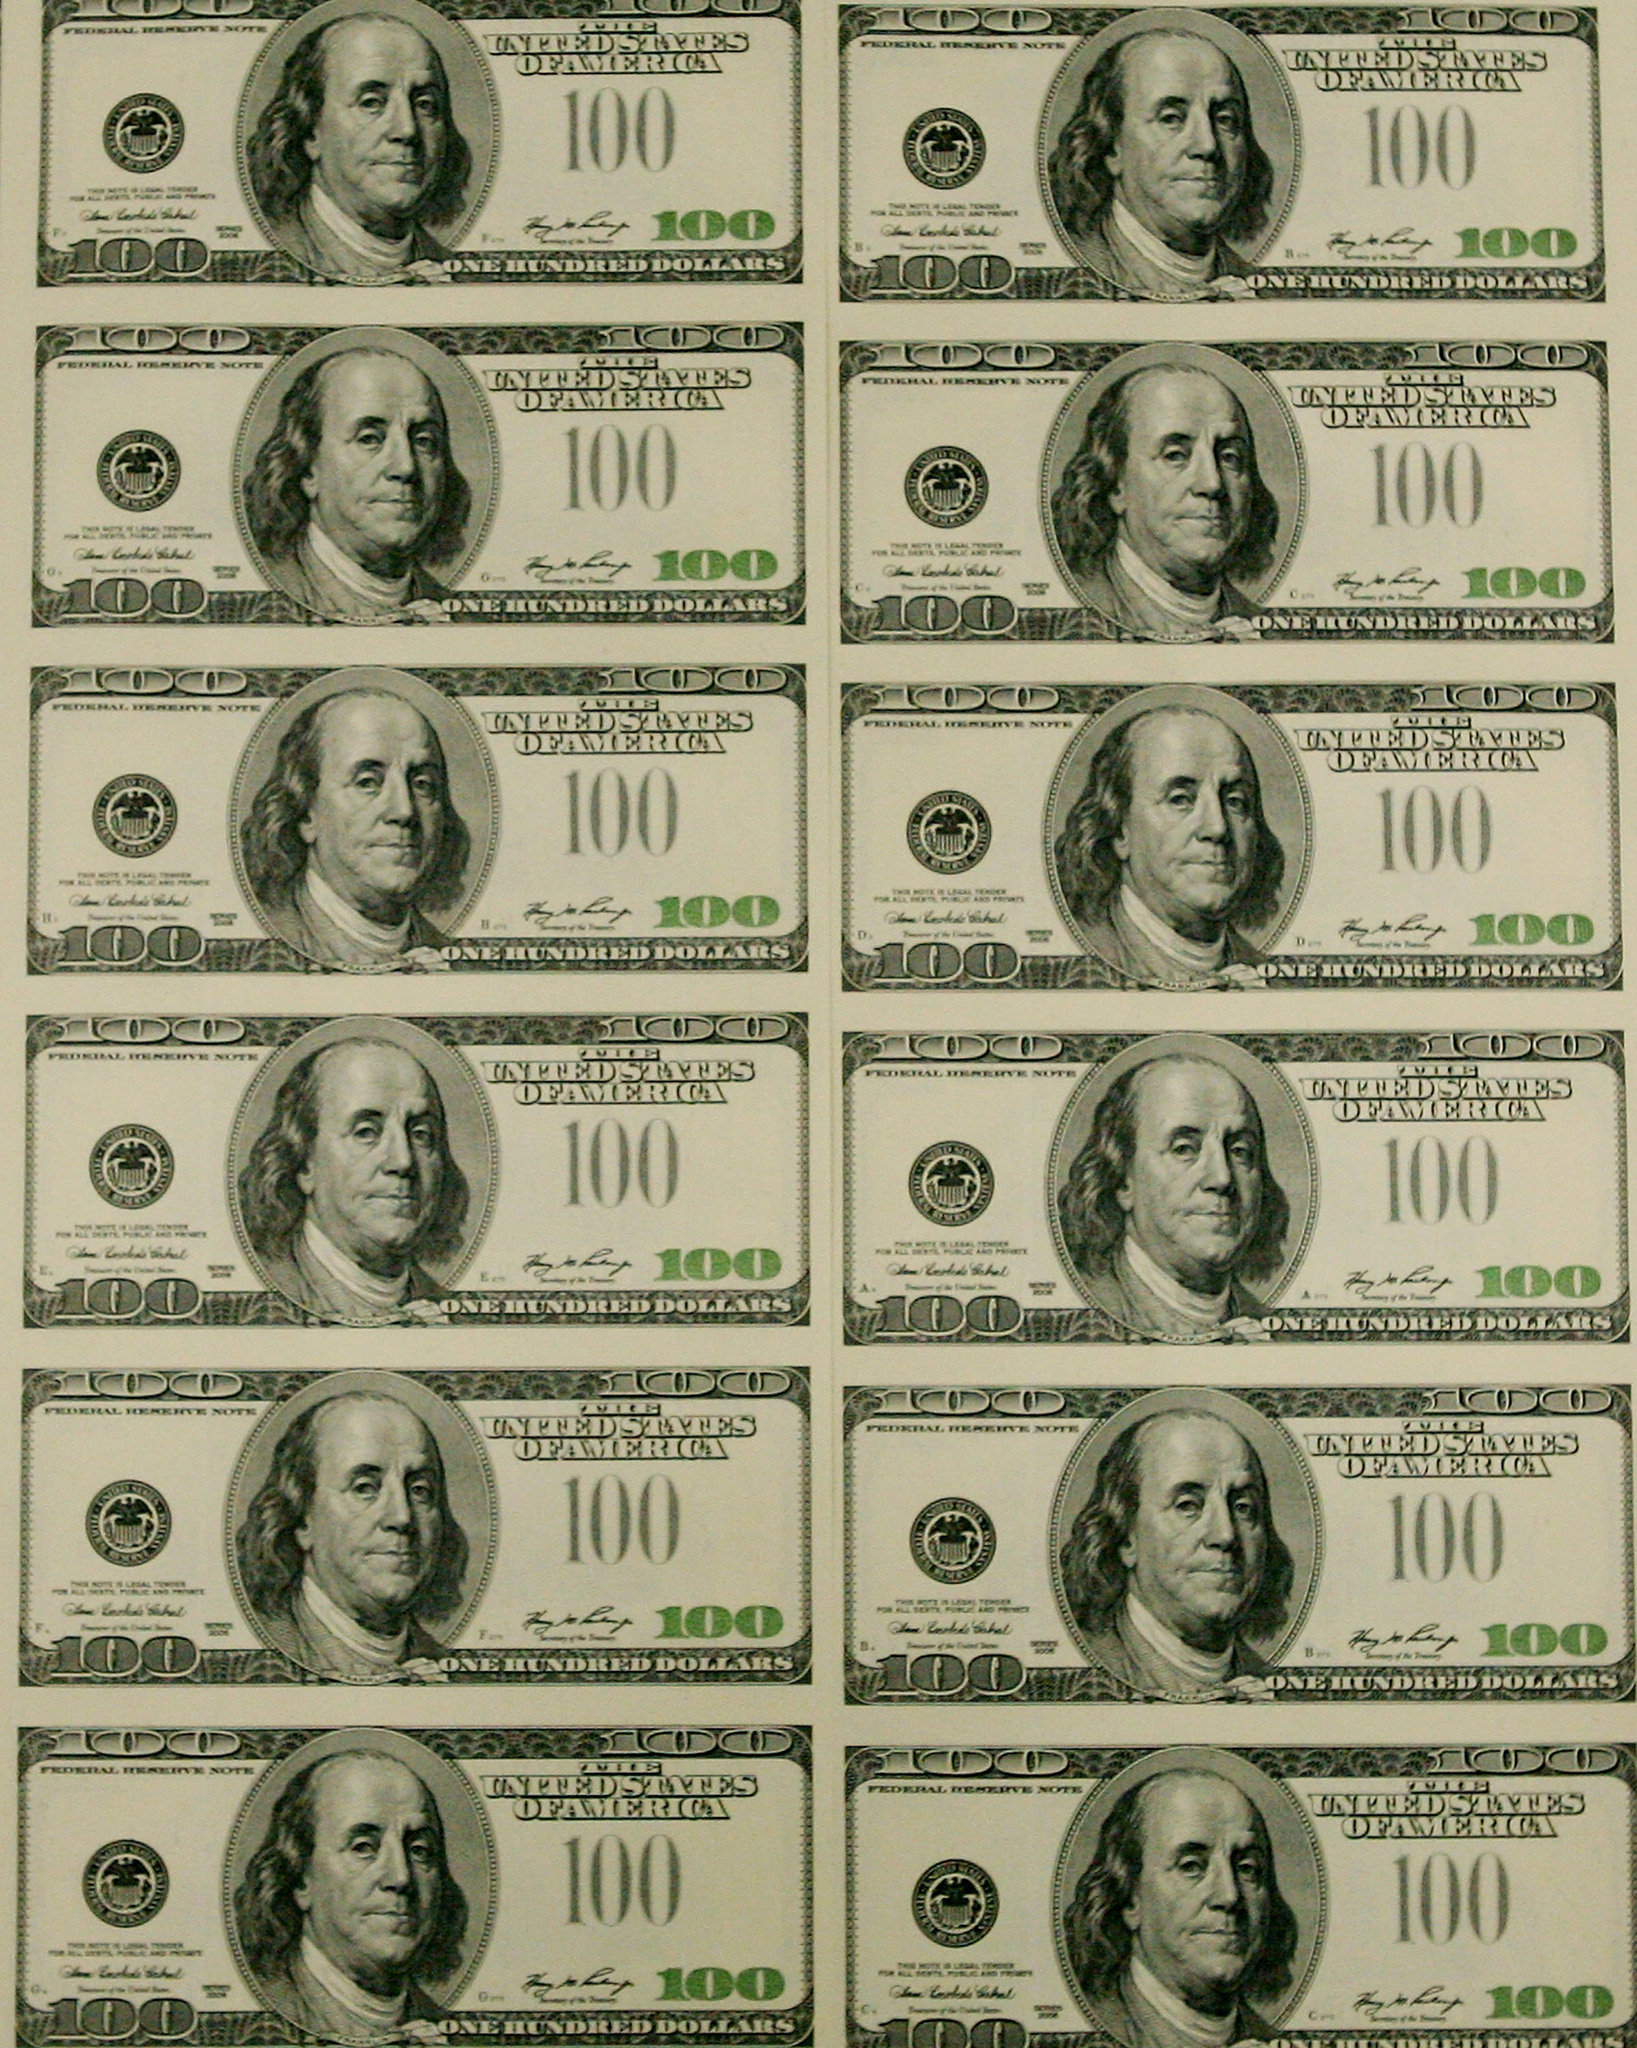 5 Best Images of Printable Fake Money Bills  Julianne Hough Printable  